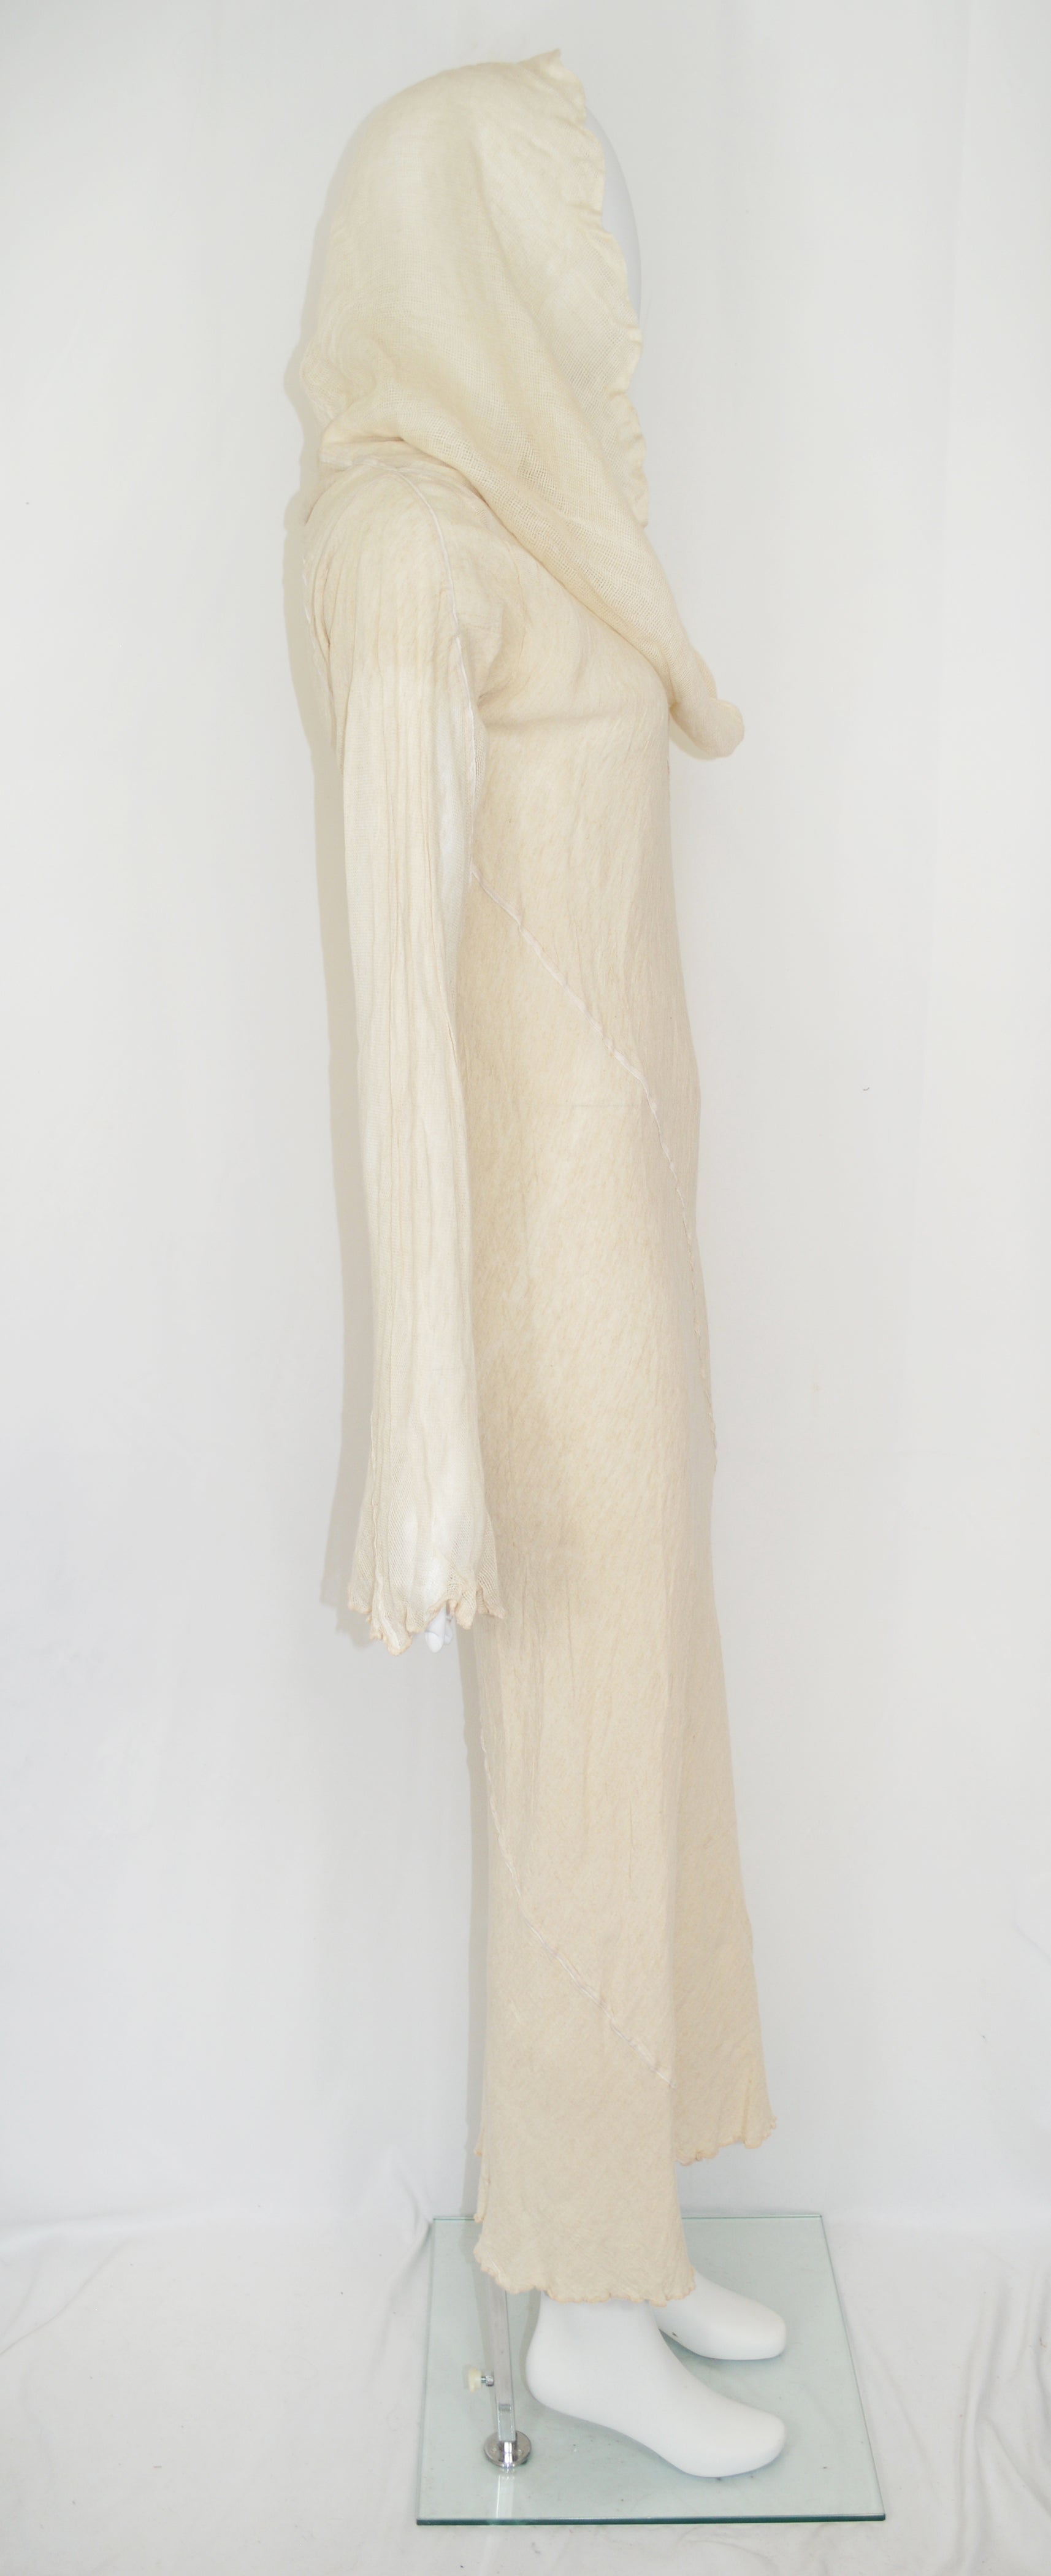 Issey Miyake 1998 linen dress